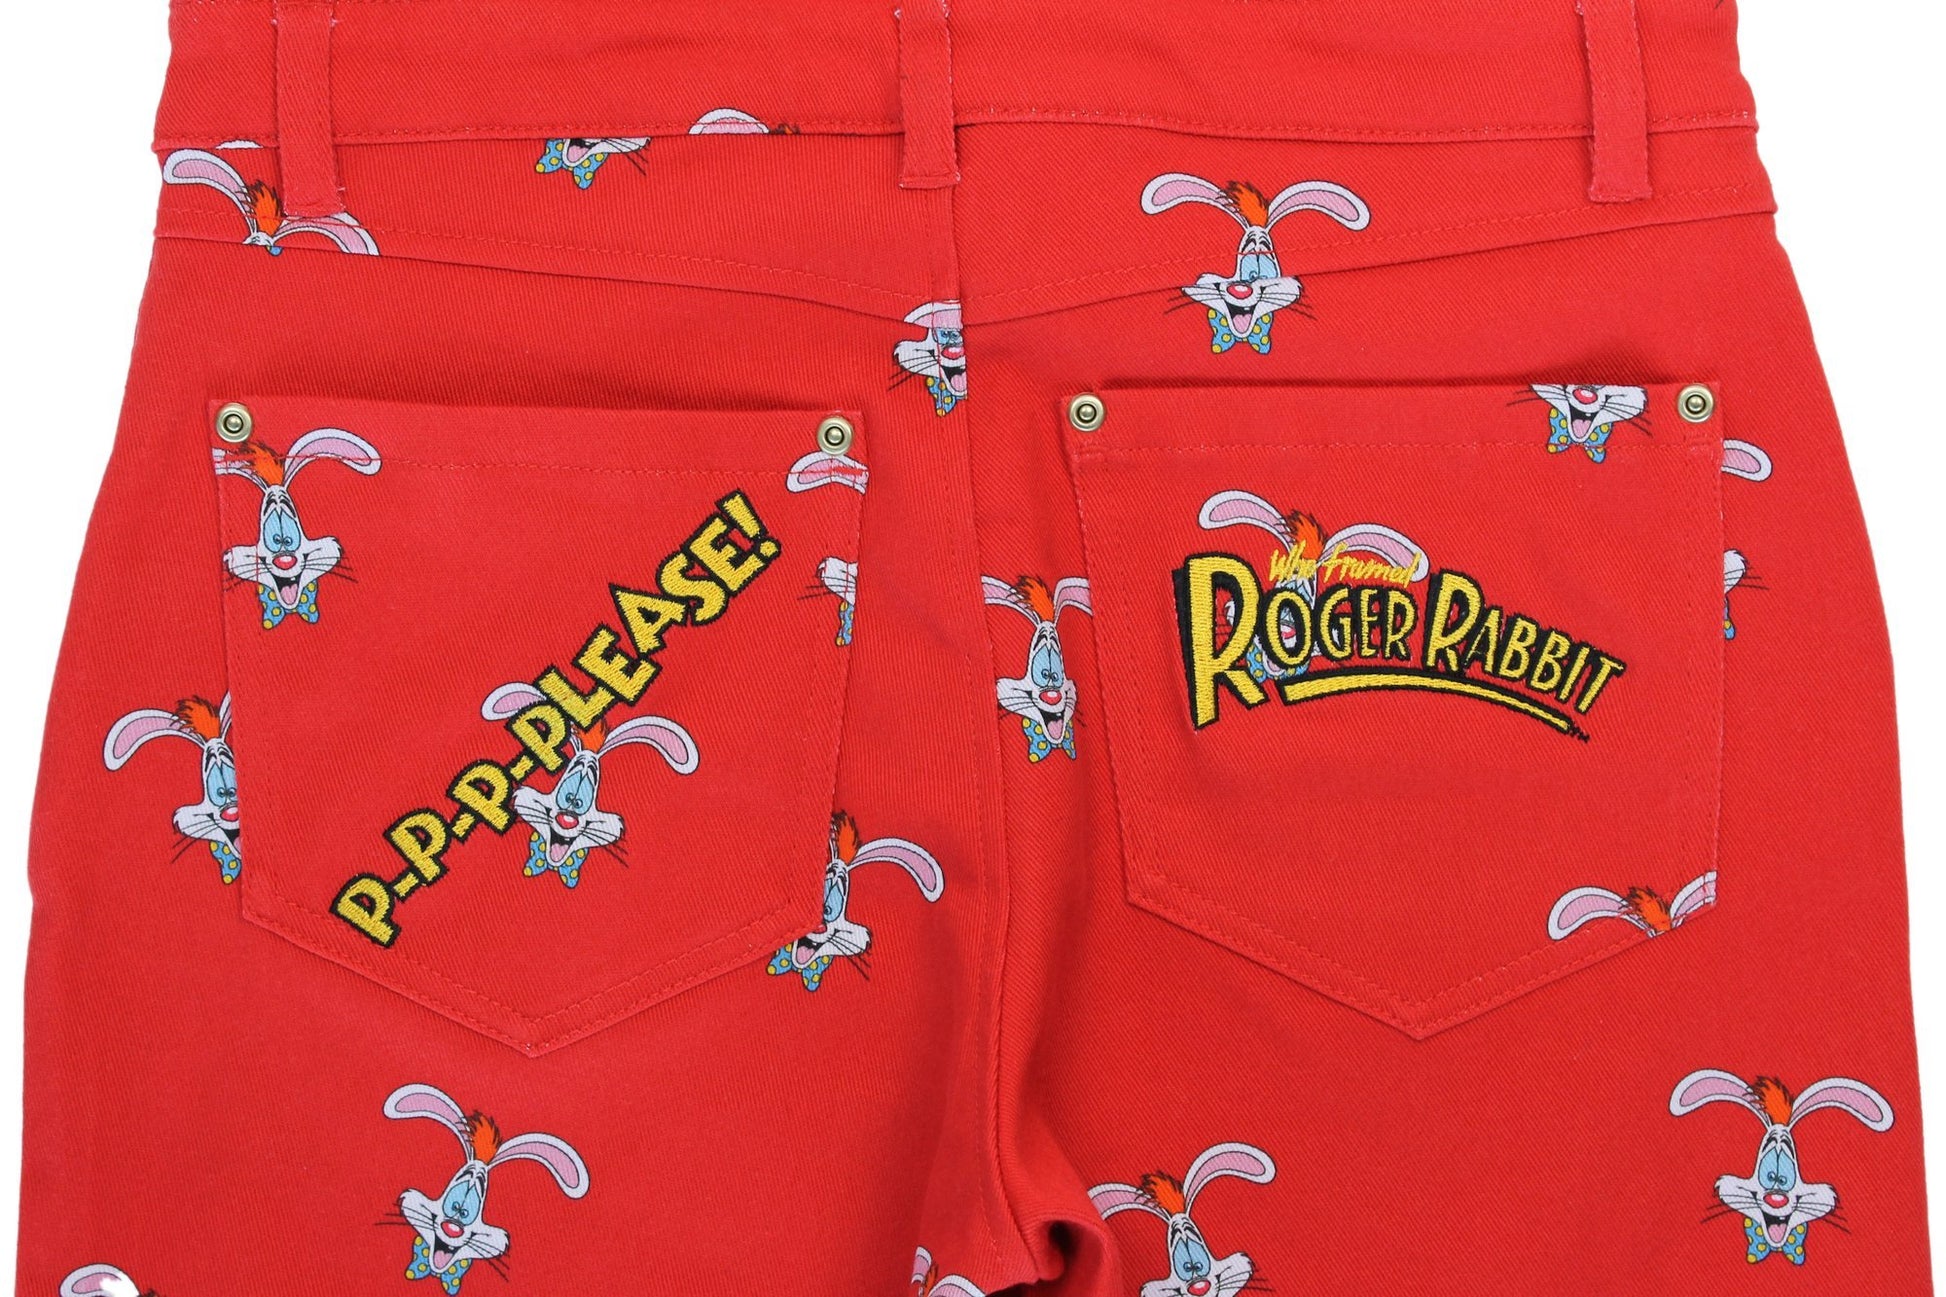 Roger Rabbit Shorts Overalls - Rockamilly-Shorts & Skirts-Vintage